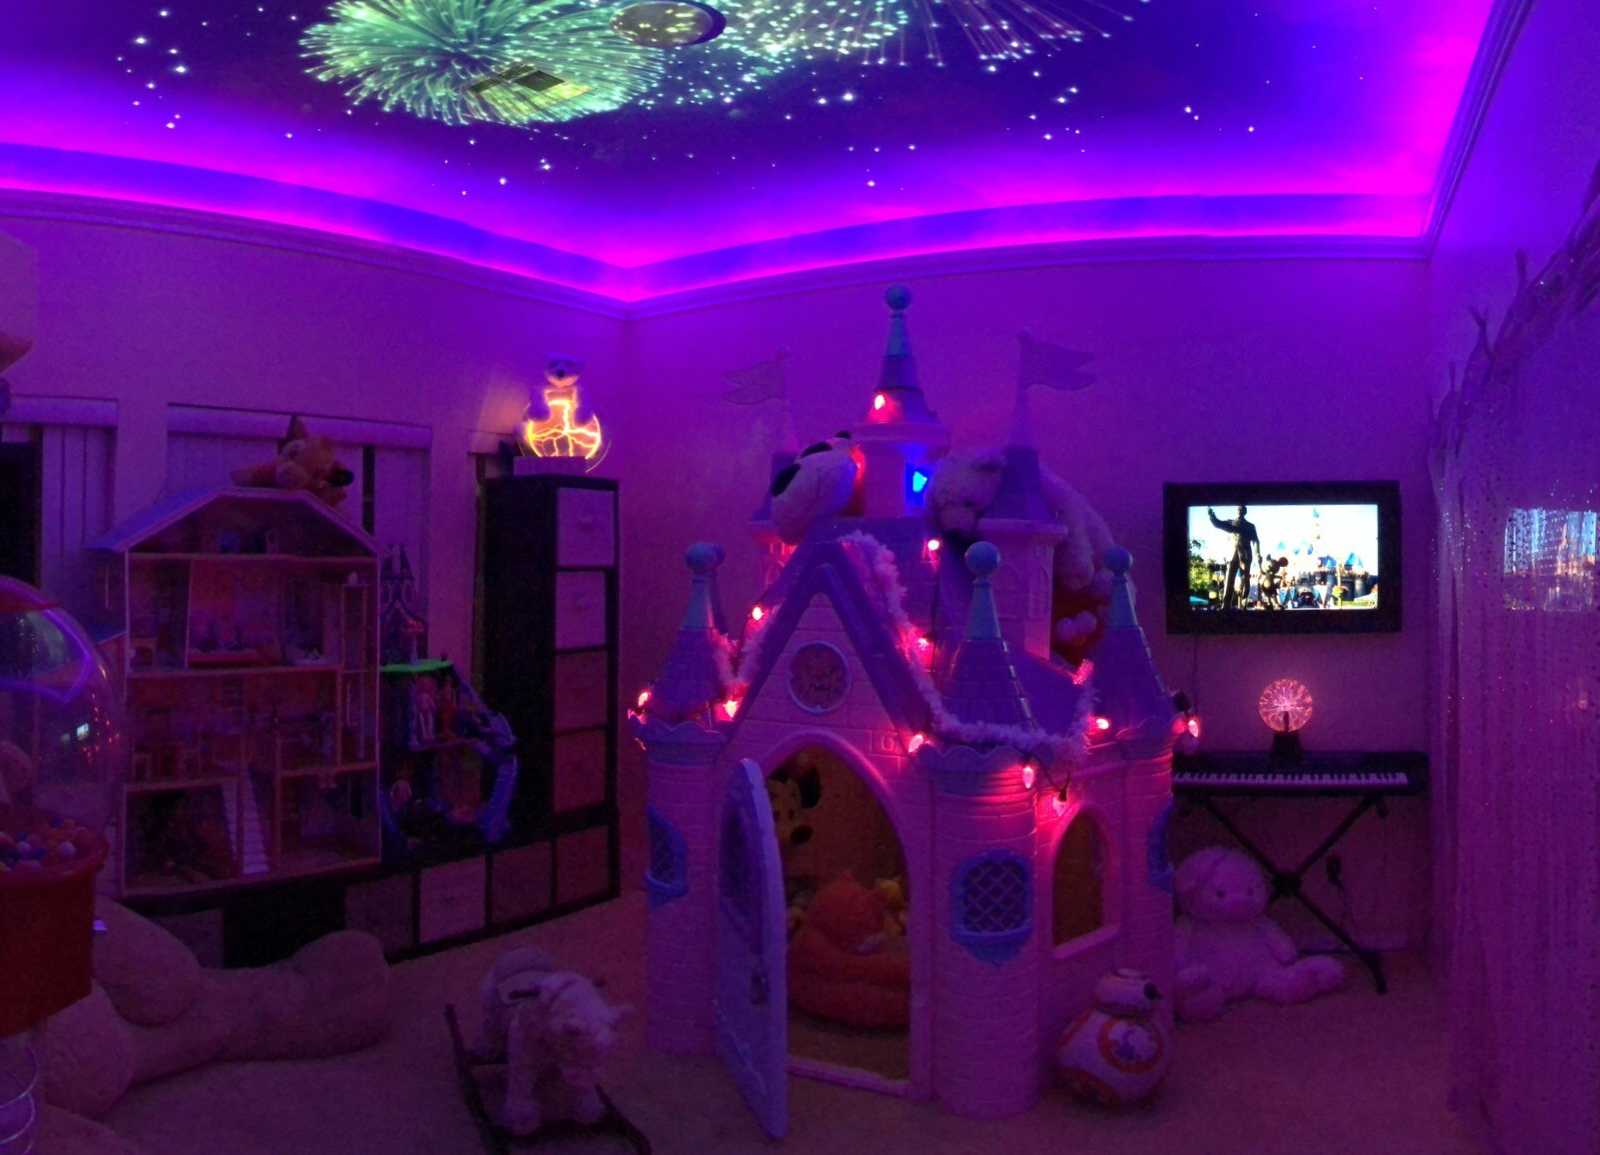 Little girl's bedroom ceiling looks like fireworks are going off